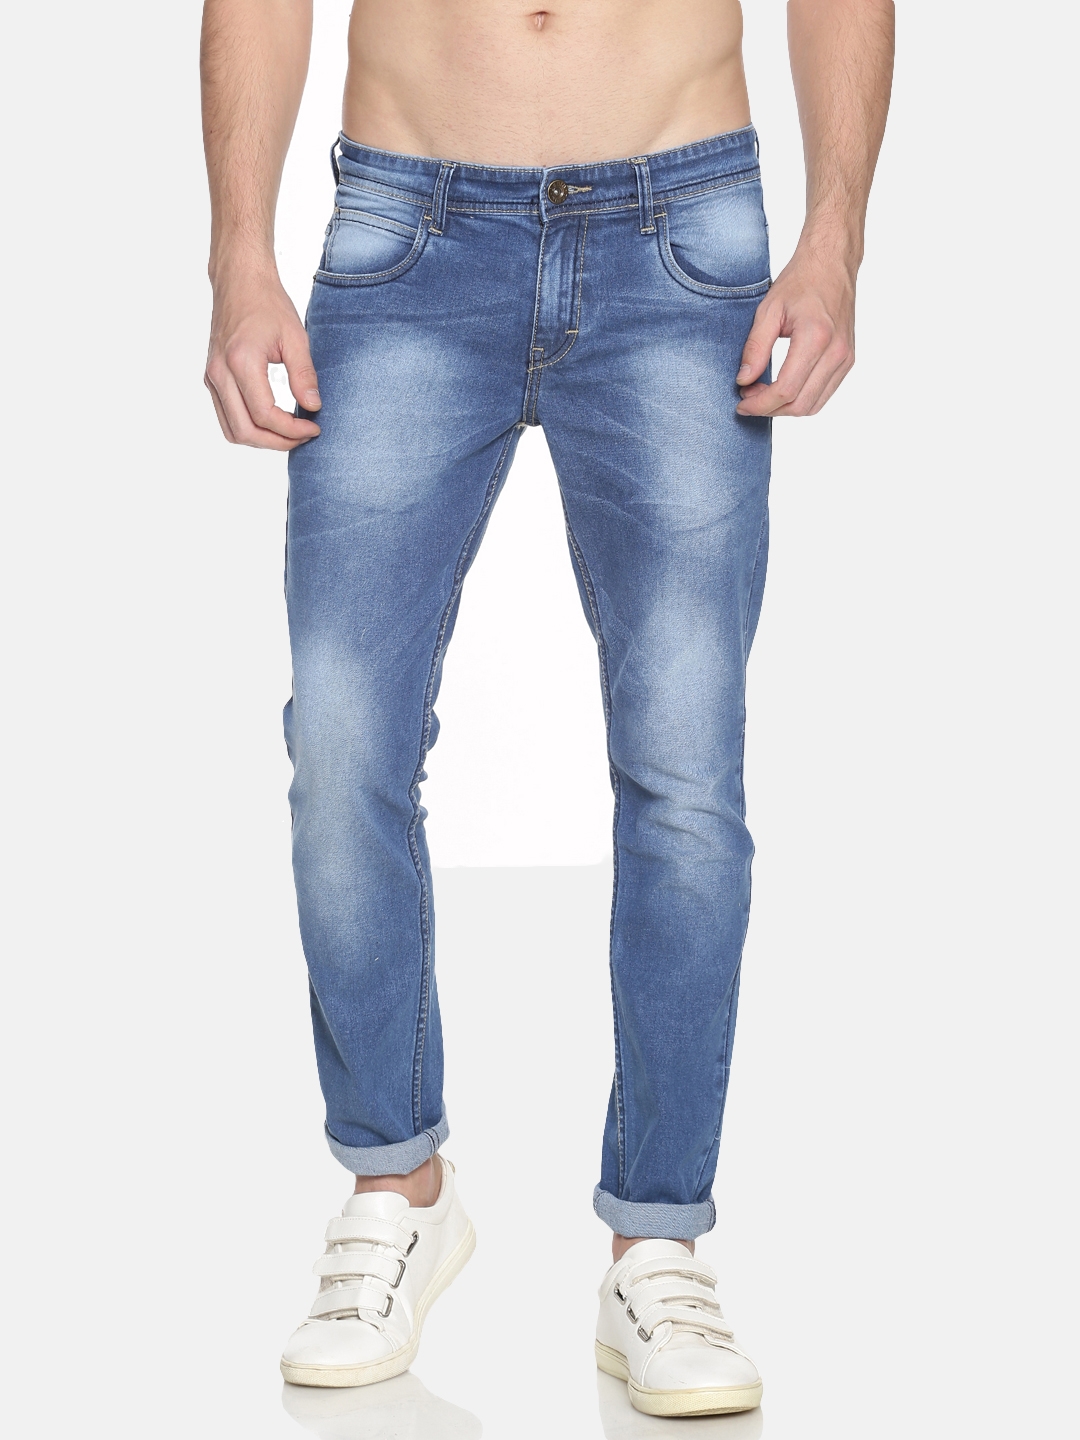 Chennis | Chennis Men's Casual Clean Look Jeans, Blue